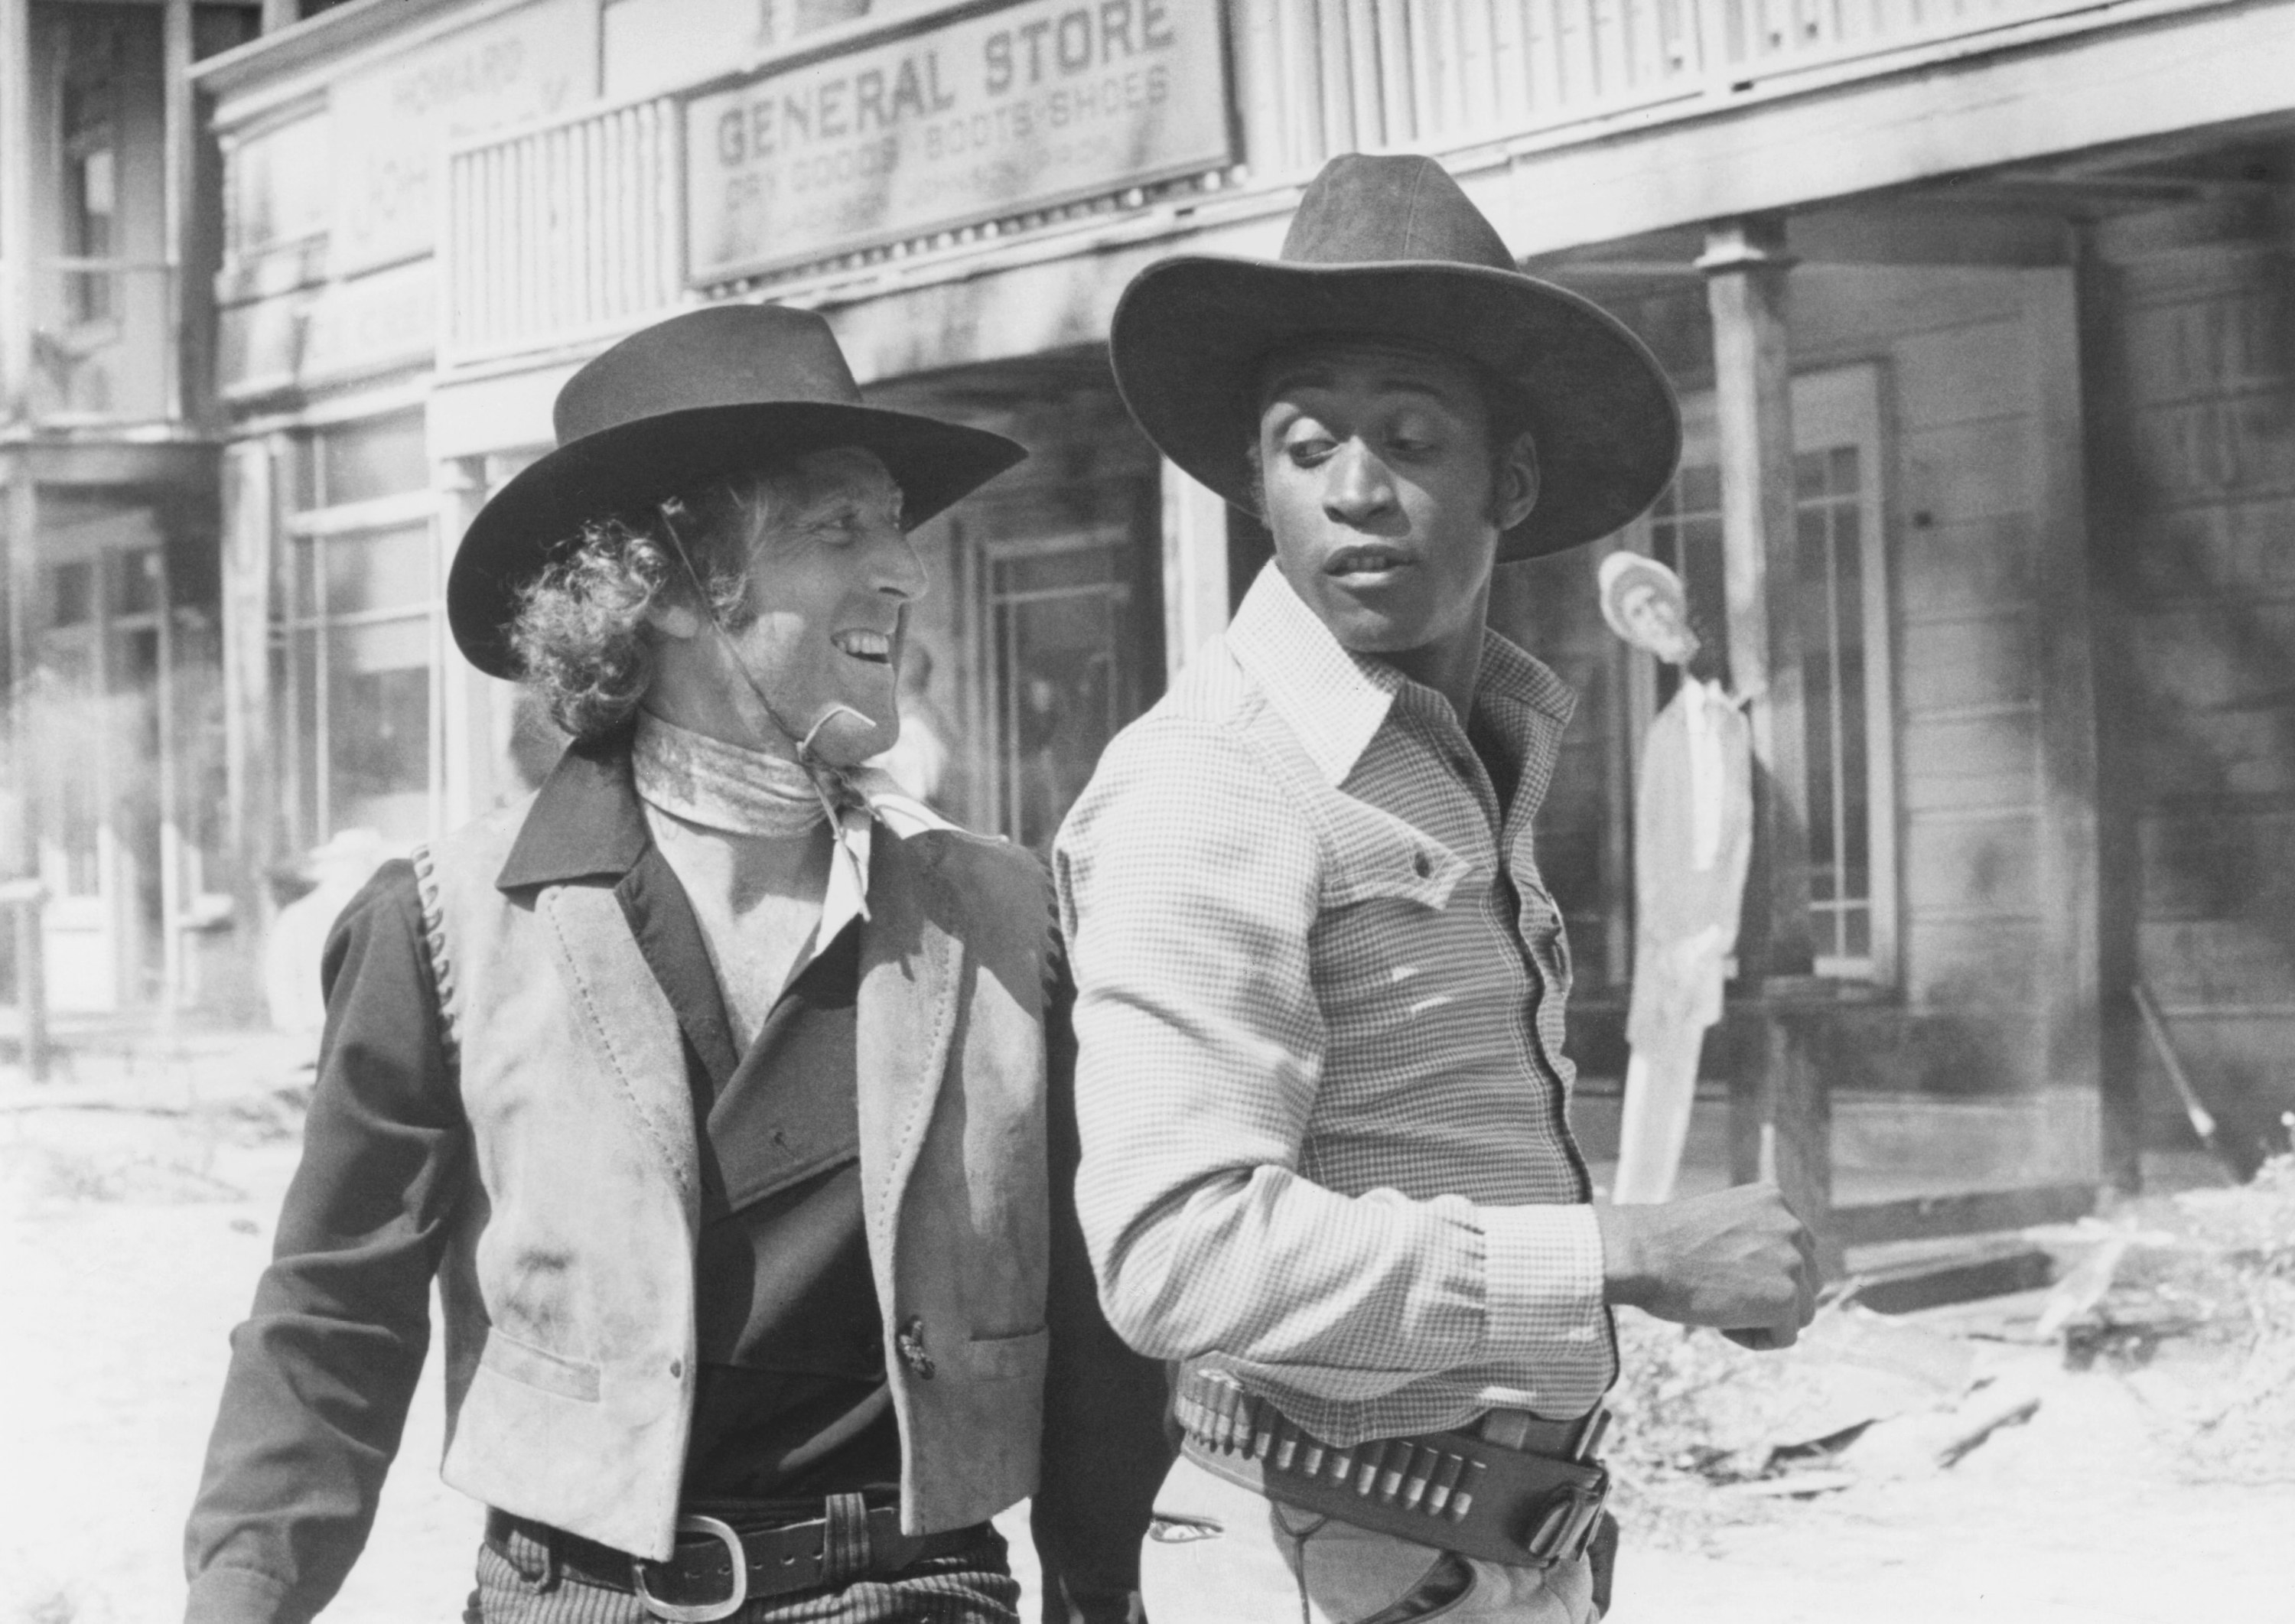 Gene Wilder and Cleavon Little stand in a town street